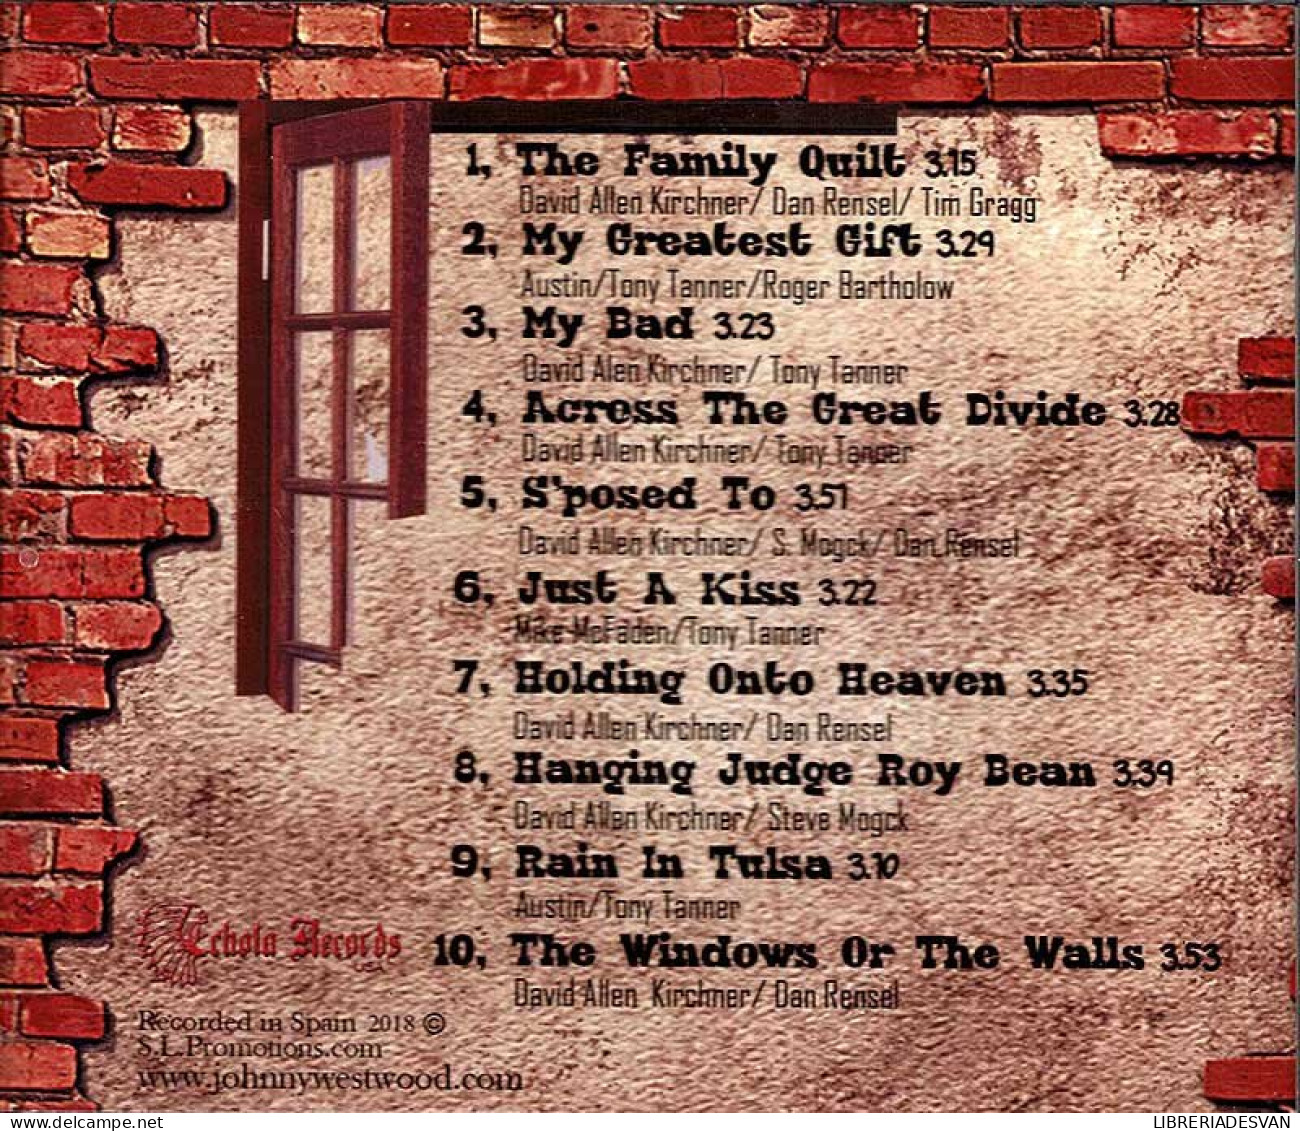 Johnny Westwood - The Windows Or The Walls. CD (con Autógrafo) - Country En Folk